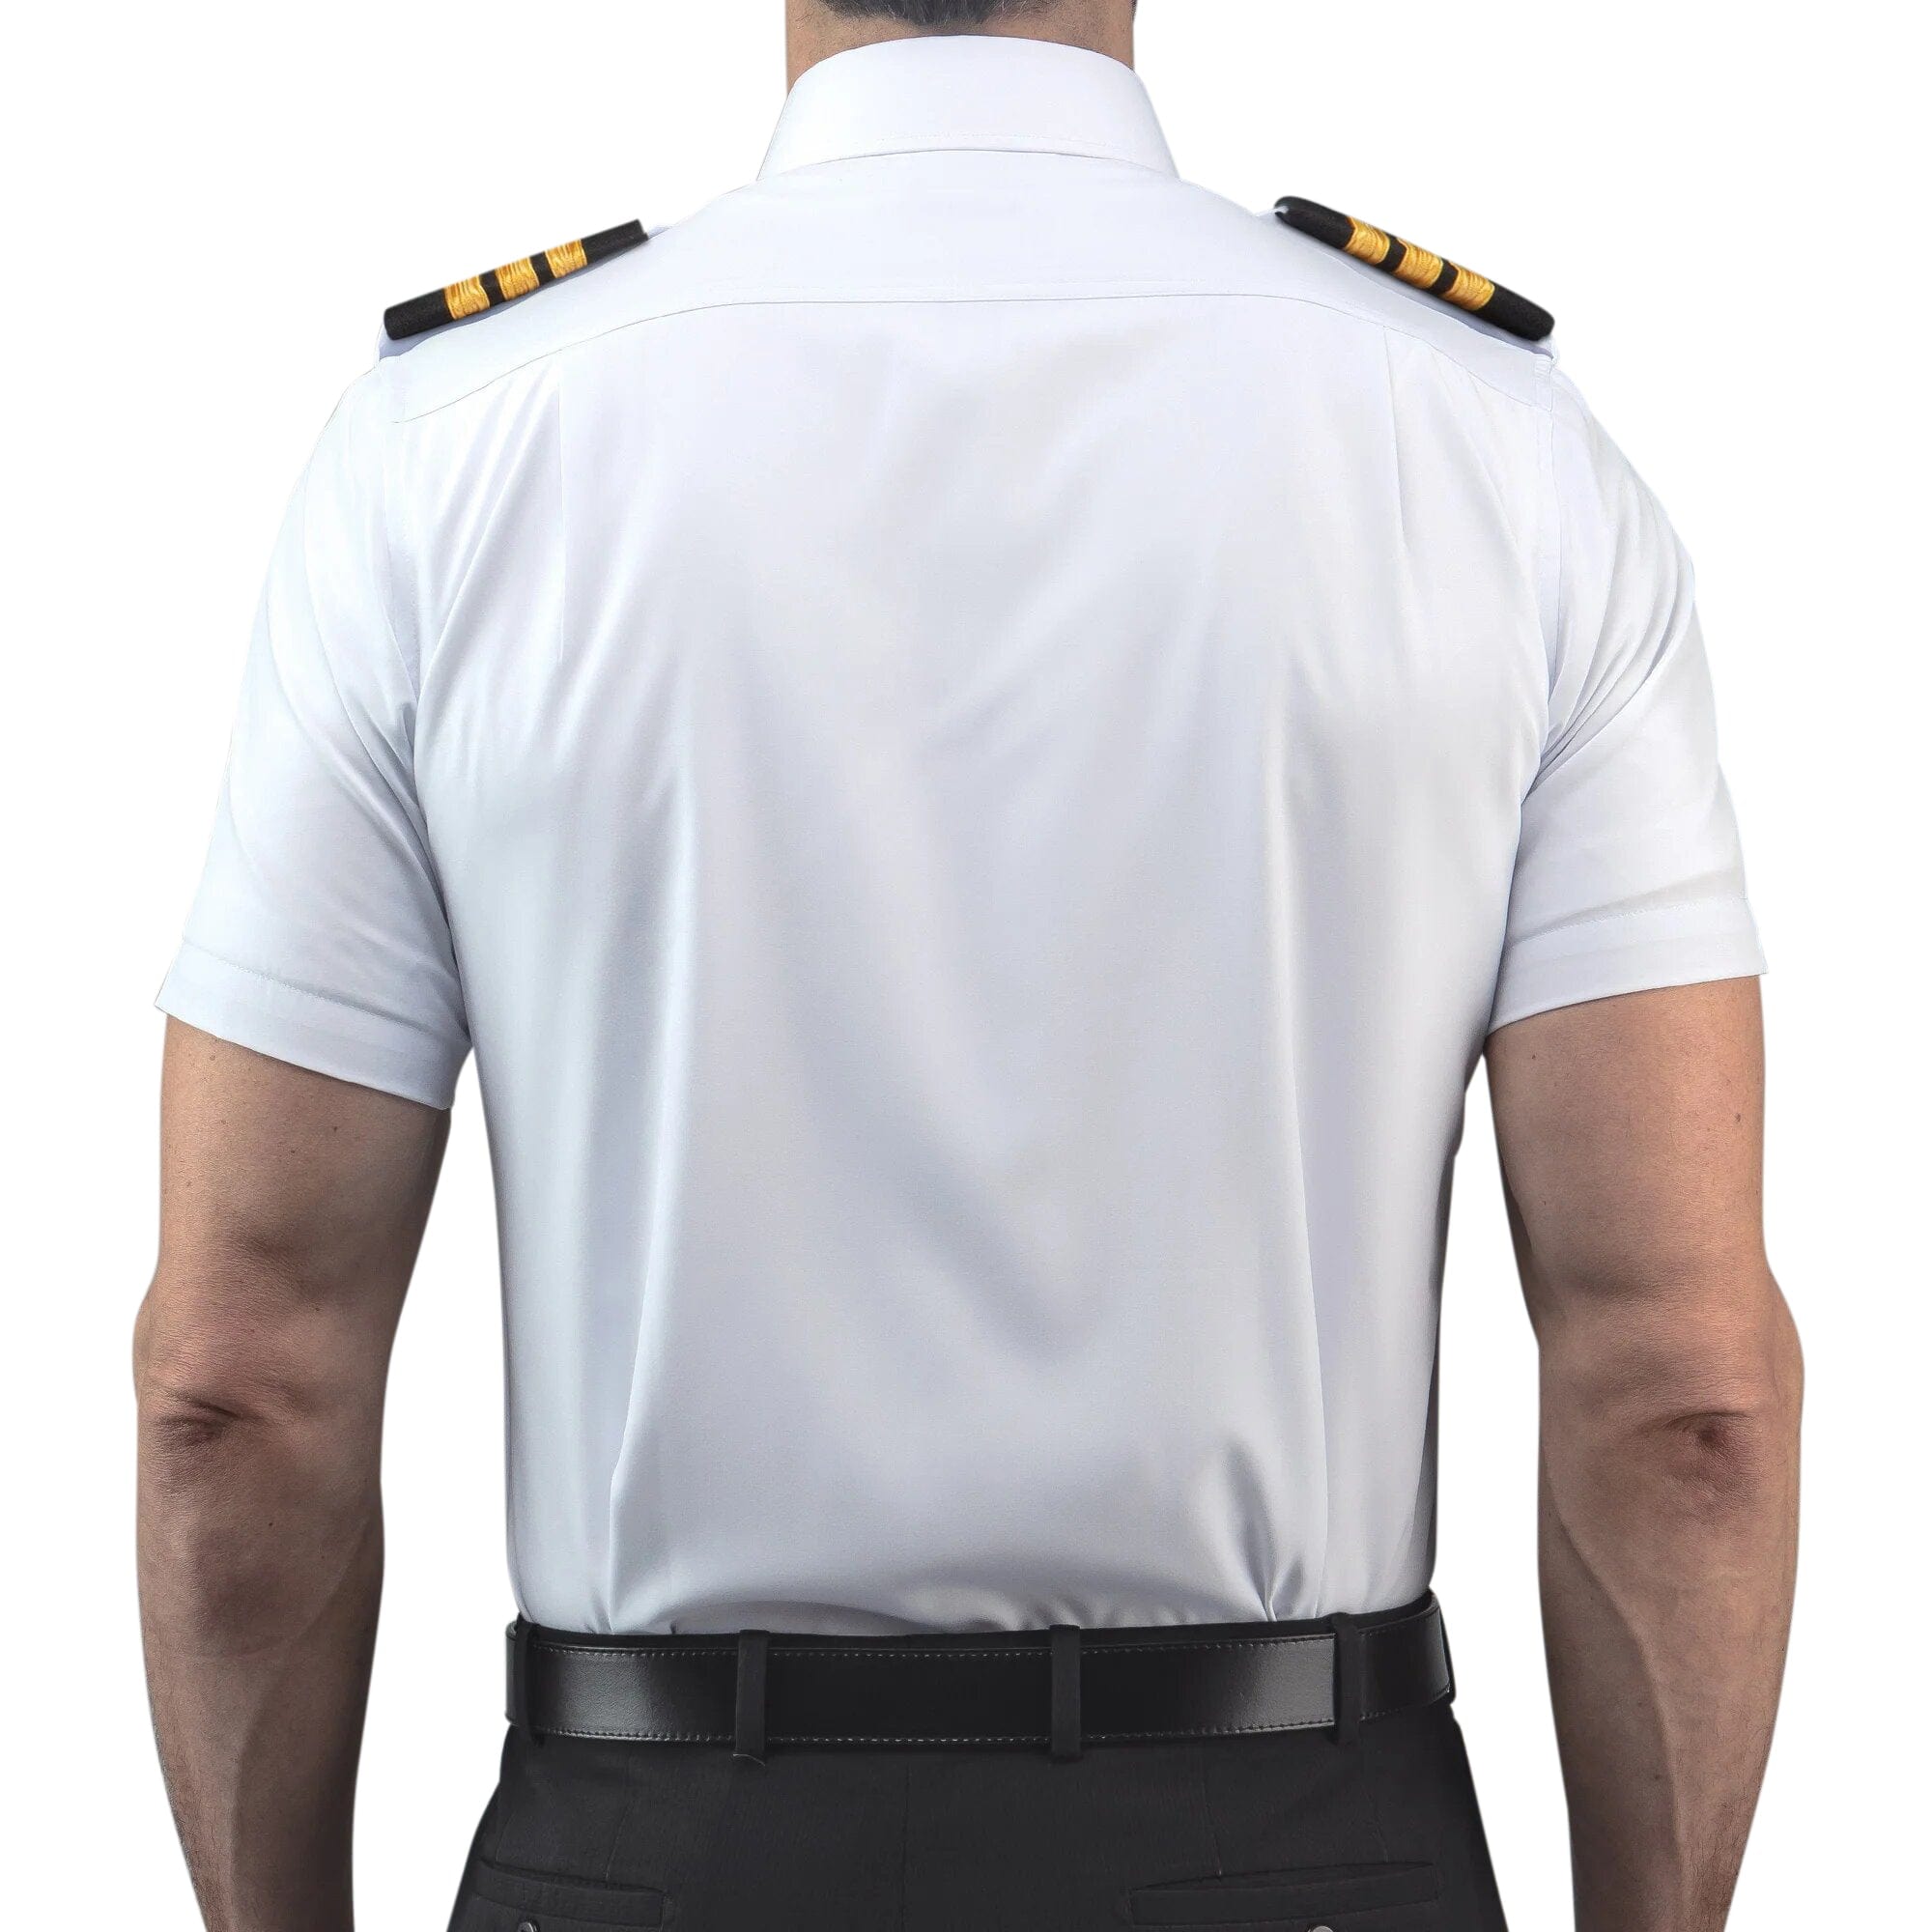 Lift Aviation Flextech Professional Pilot Short Sleeve Shirt (With Eyelets)